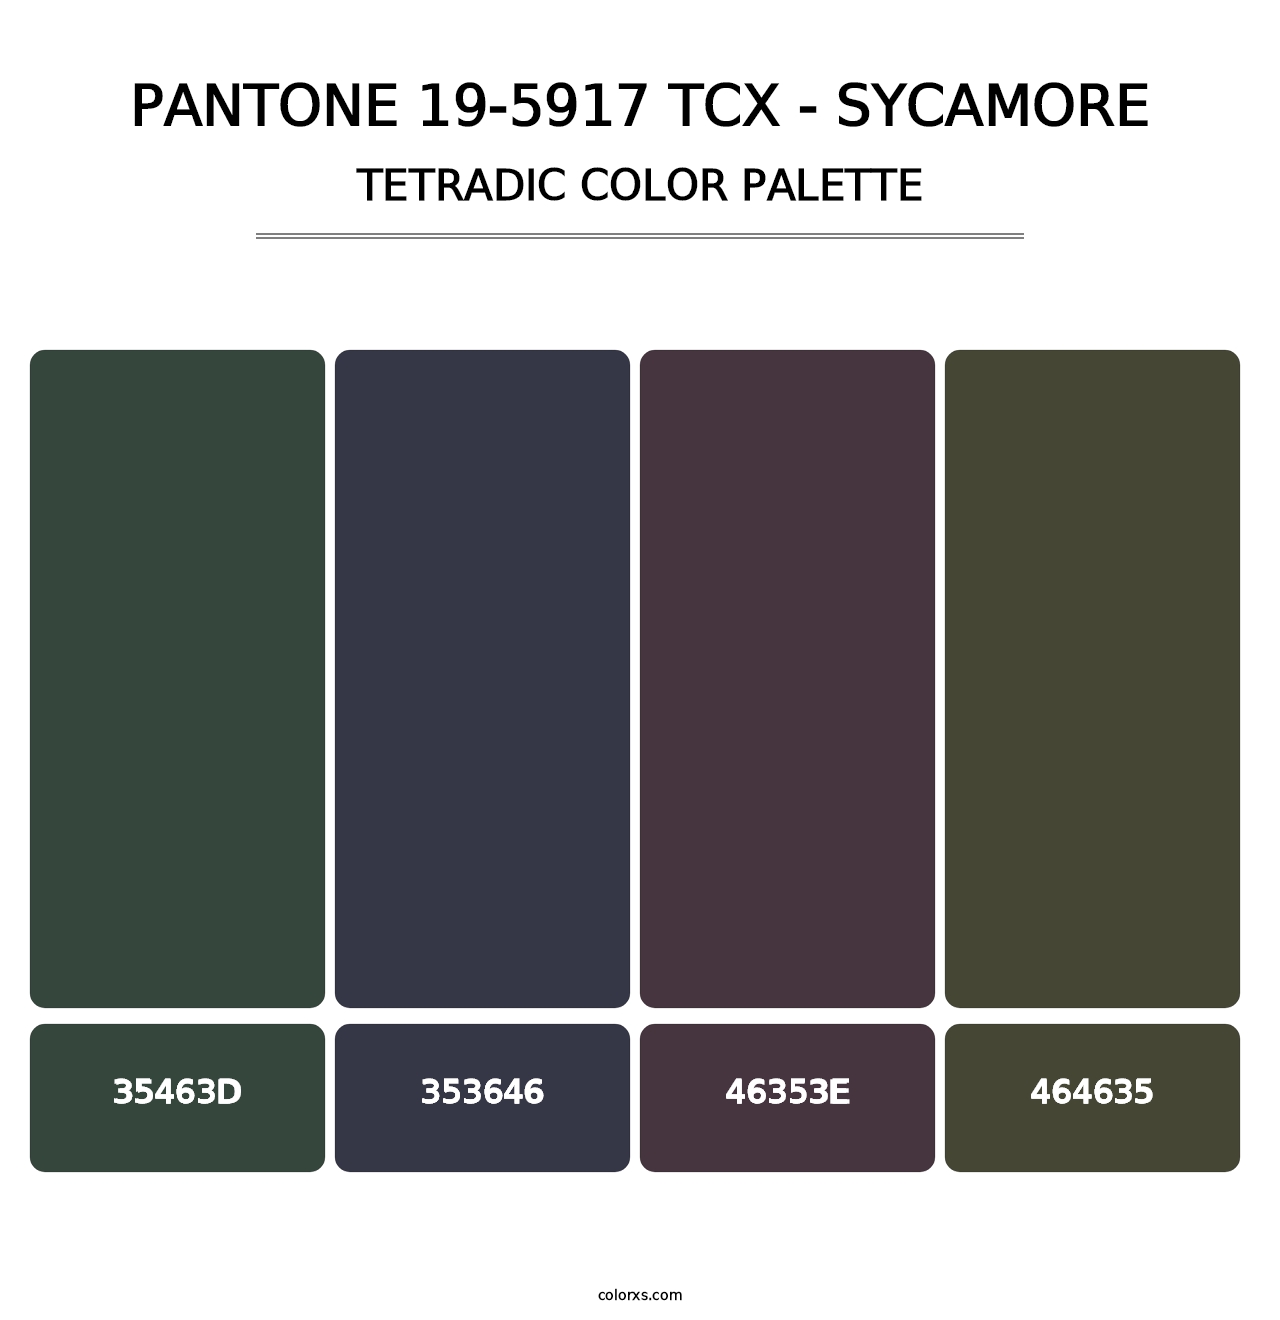 PANTONE 19-5917 TCX - Sycamore - Tetradic Color Palette